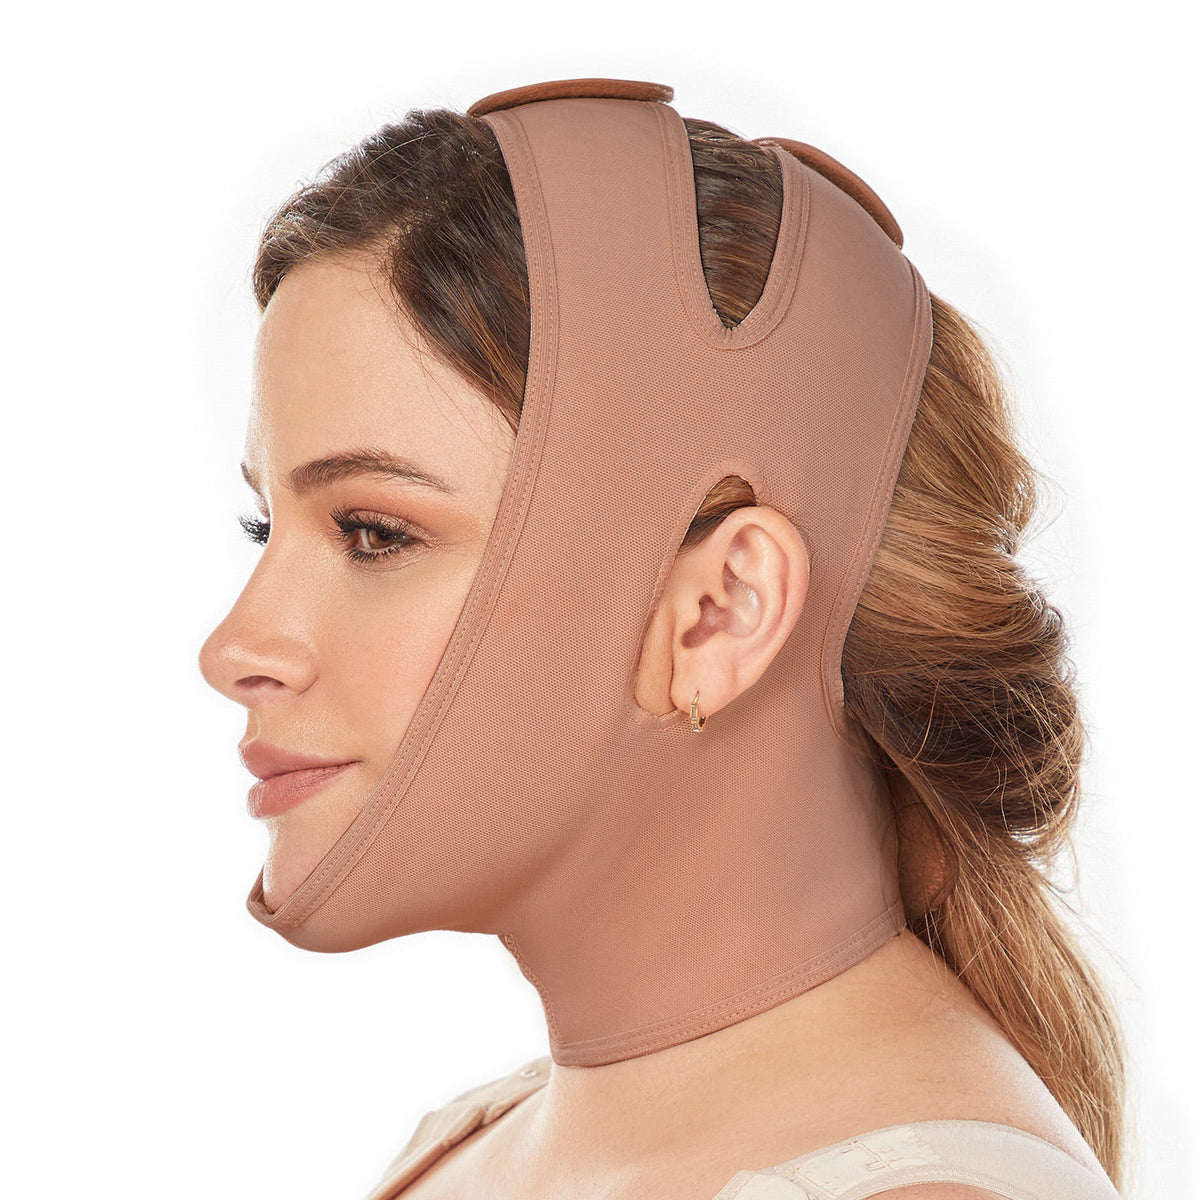 Compression Chin Strap for Women | Mentonera | Powernet Fajas MariaE 9010